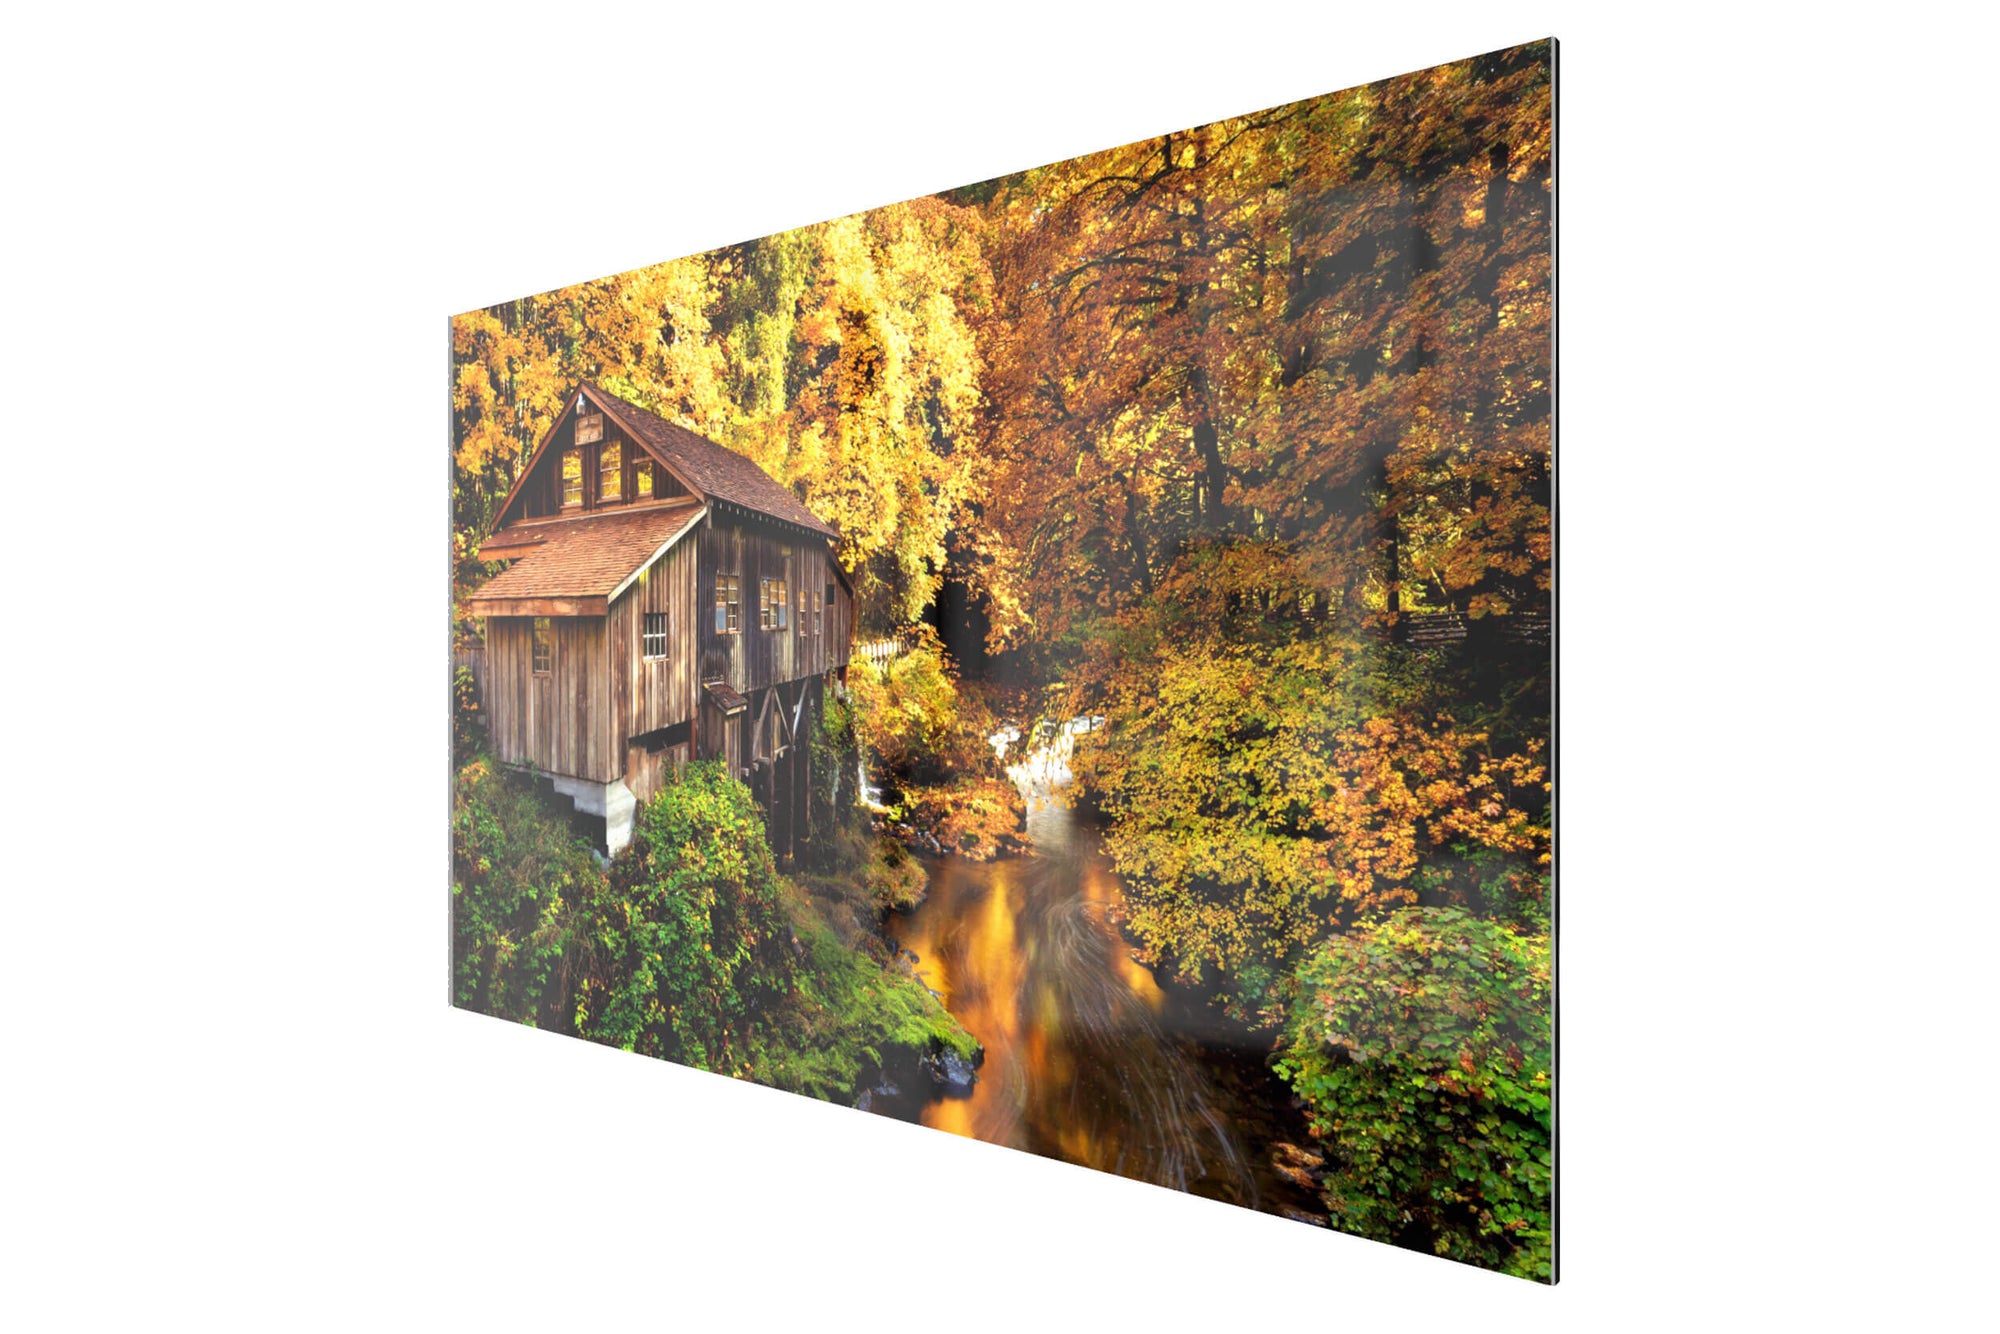 A piece of Washington art using TruLife acrylic shows the Cedar Creek Grist Mill.